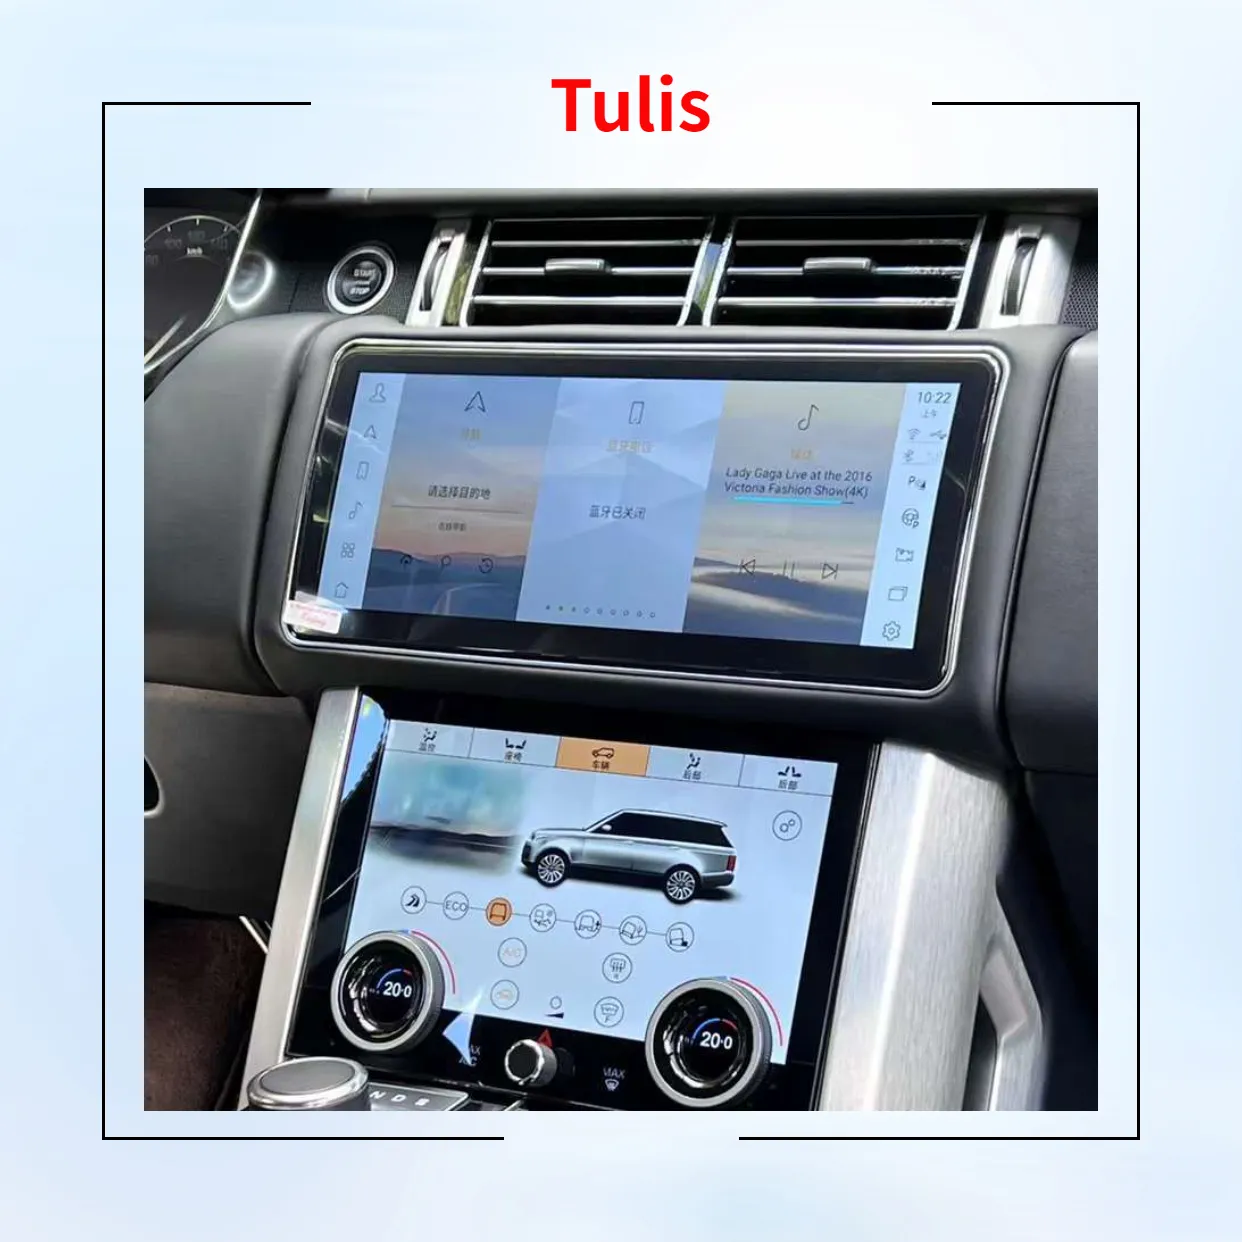 Tulis Android araba radyo Stereo Range Rover Vogue 2013-2016 için dokunmatik ekran multimedya GPS navigasyon oto elektroniği Stereo